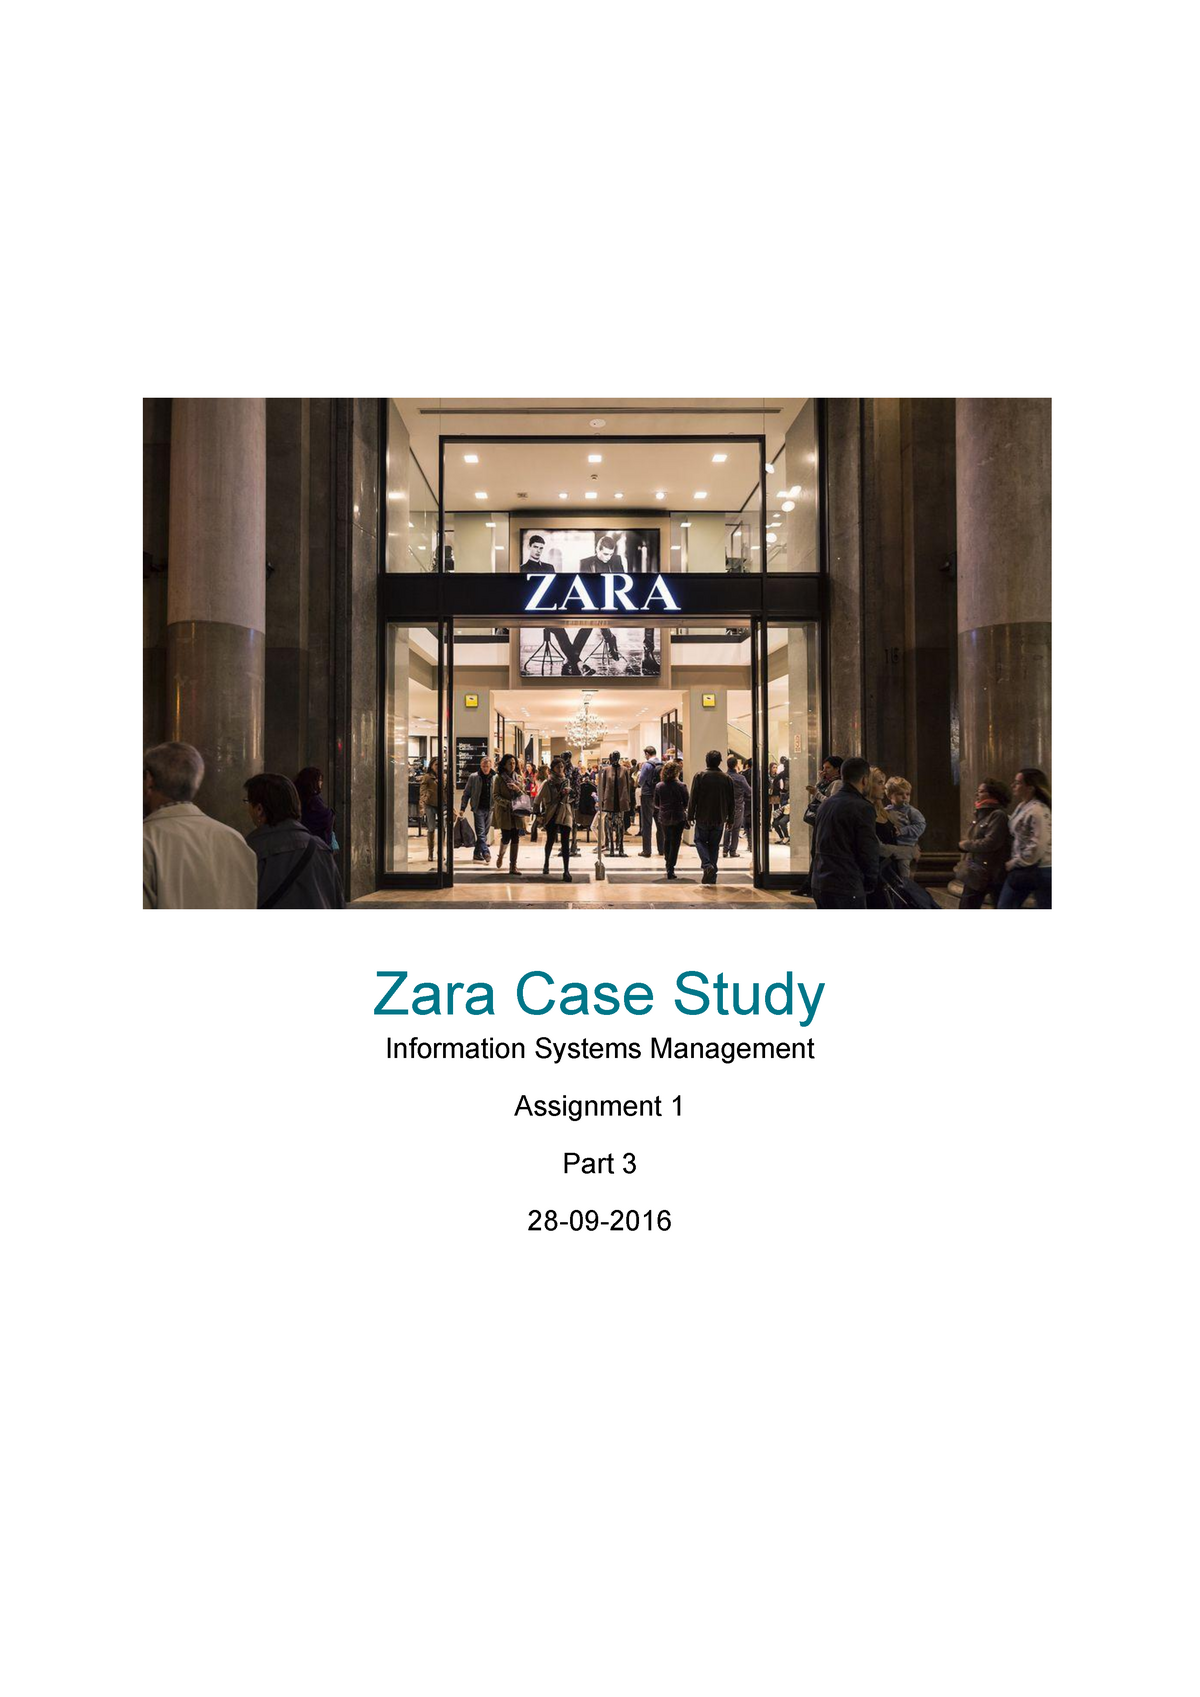 zara operations management case study